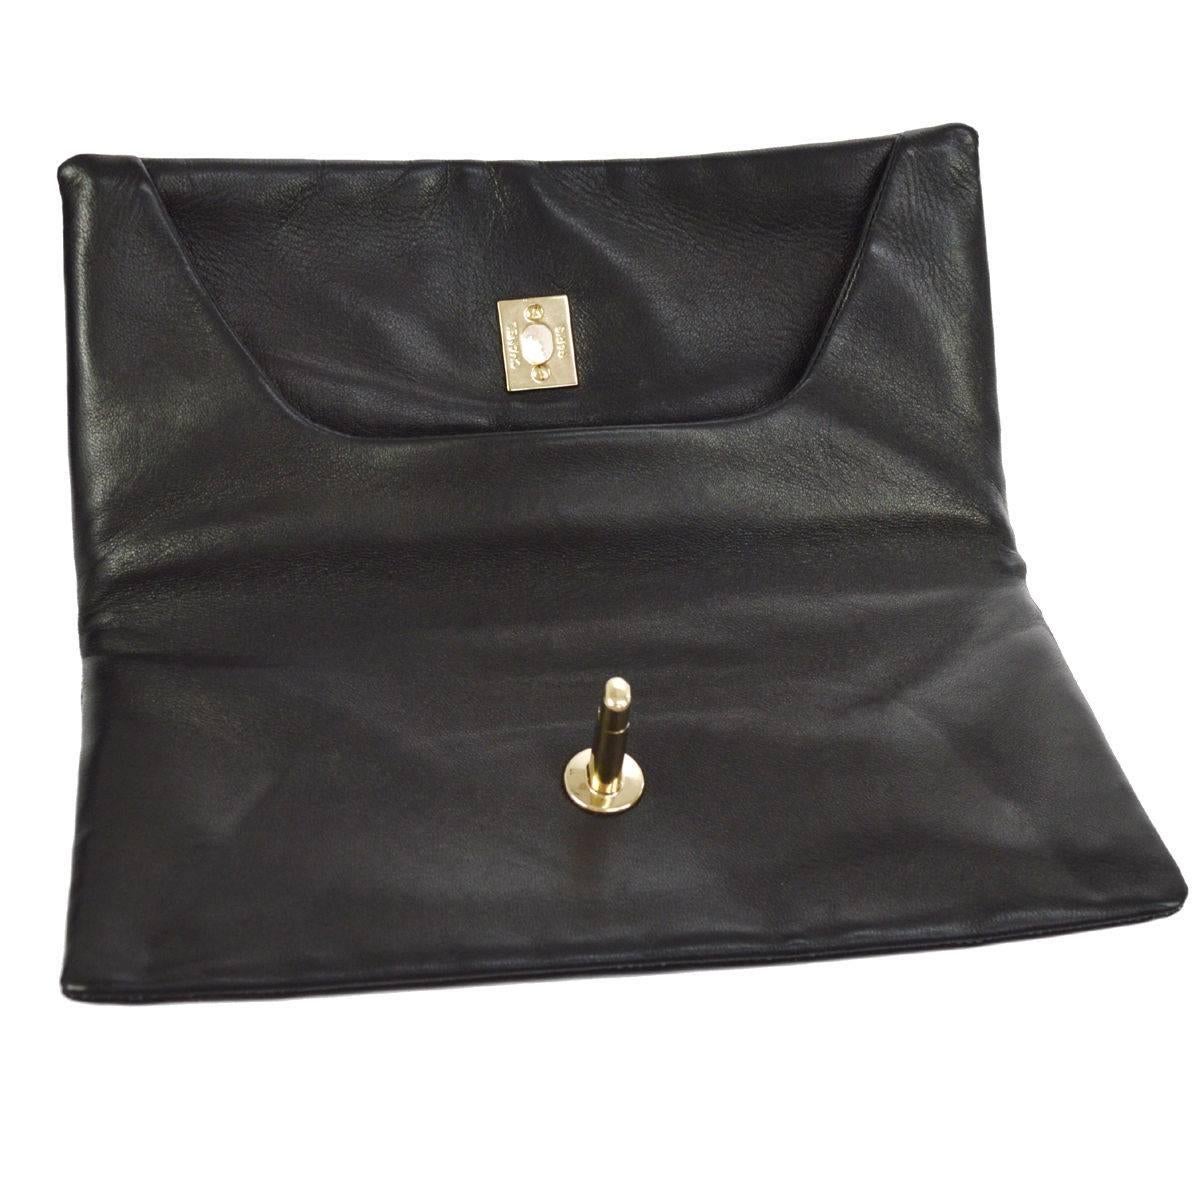 Chanel Black Patent Crystal Stone Evening Flap Clutch Bag W/Box 2